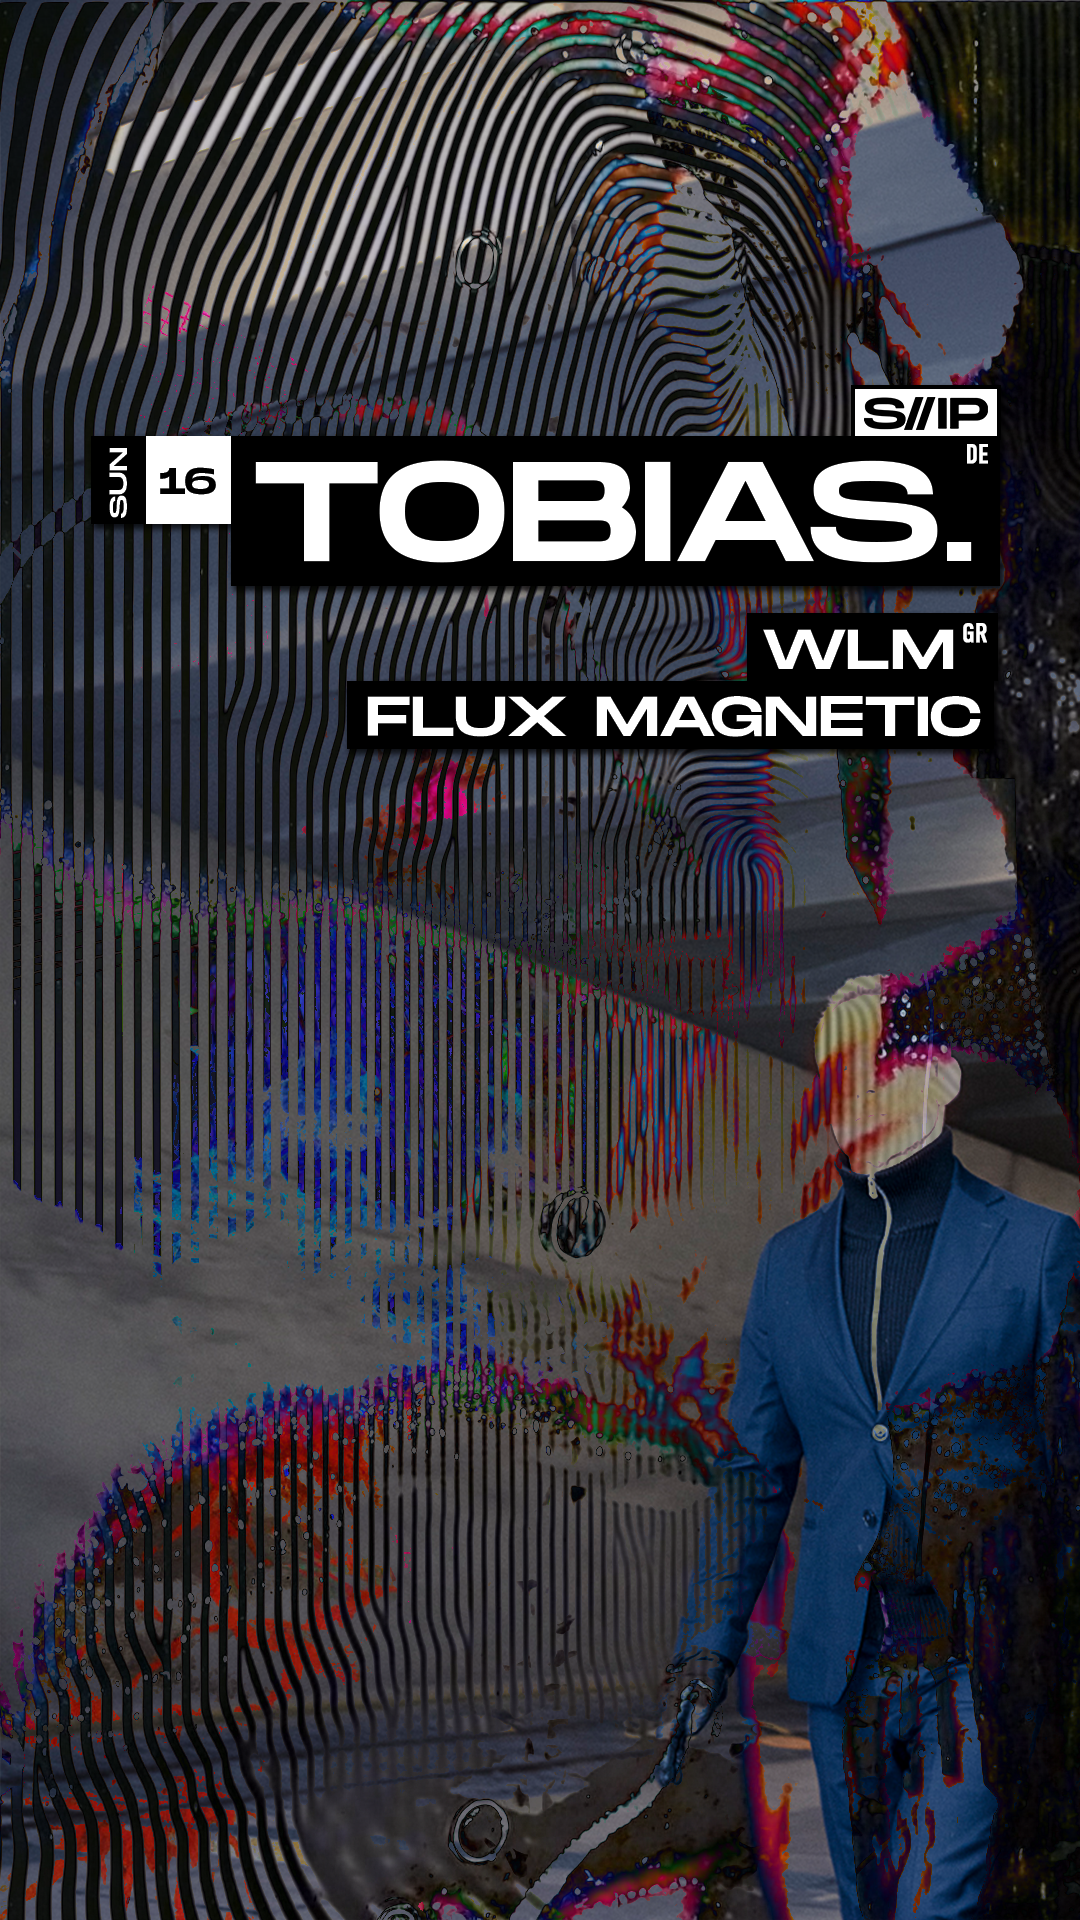 S//IP International: Tobias. - WLM - Flux Magnetic - Página frontal